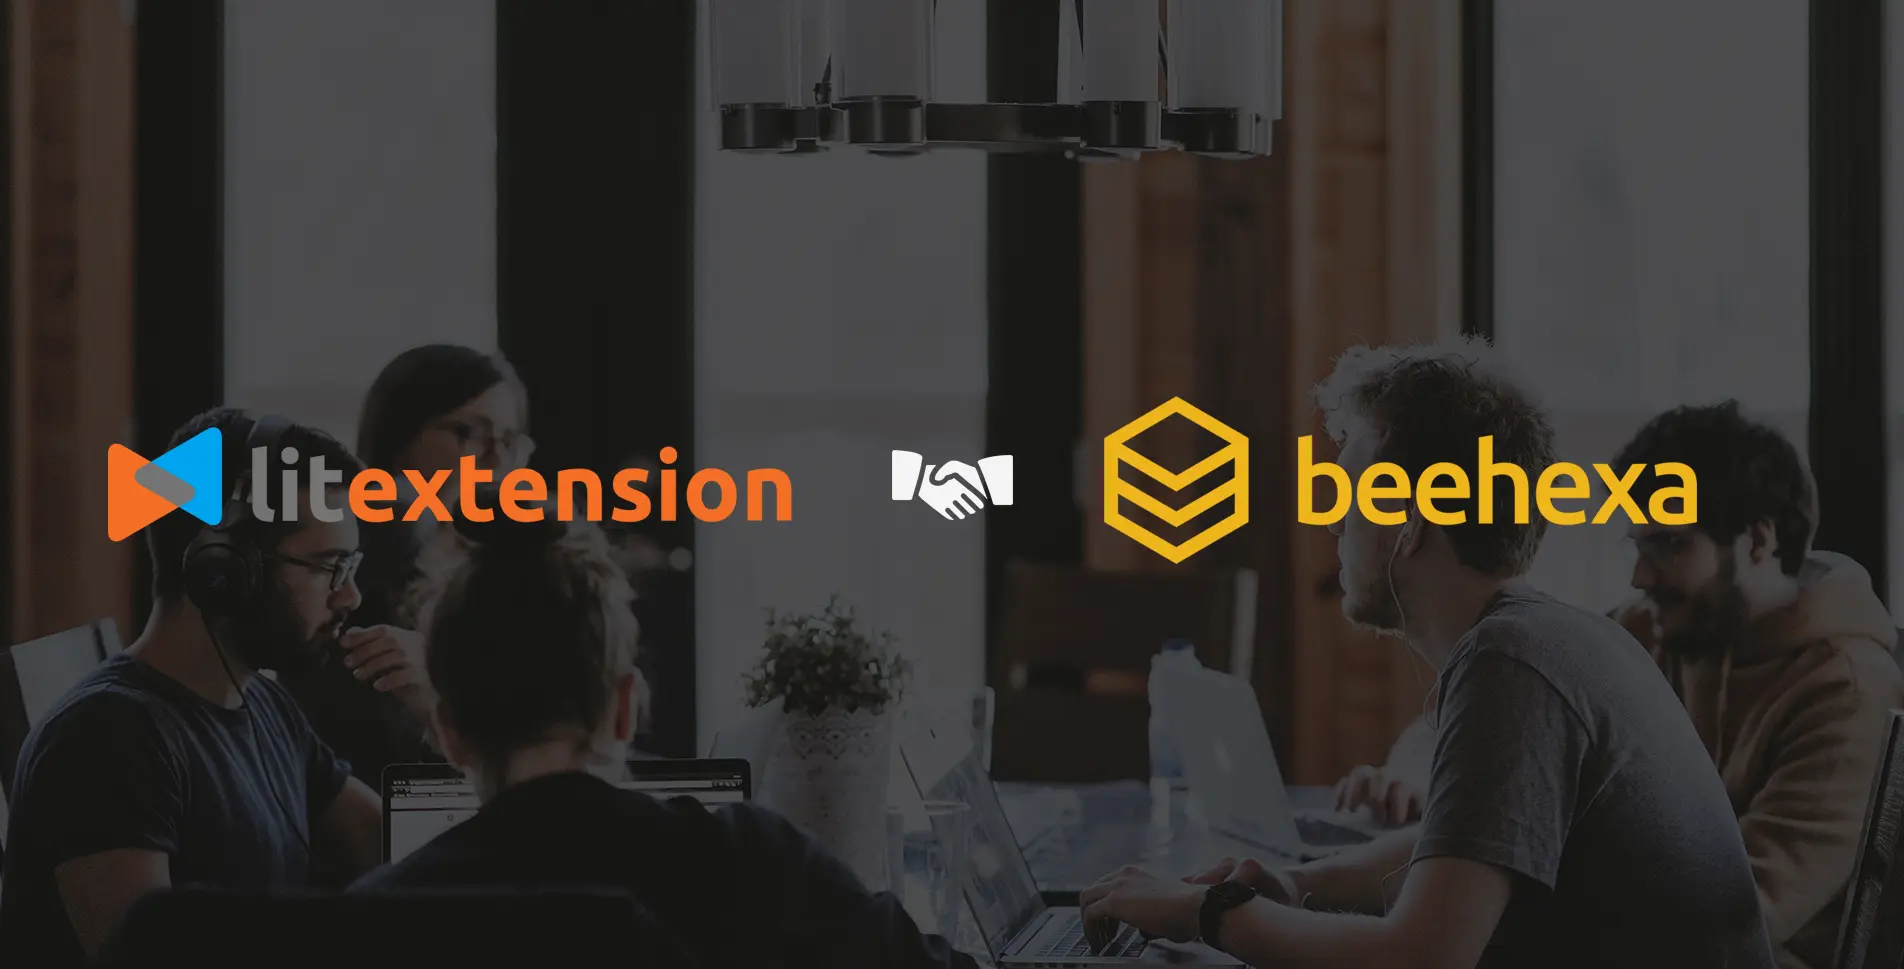 litextension and beehexa partnership announcement